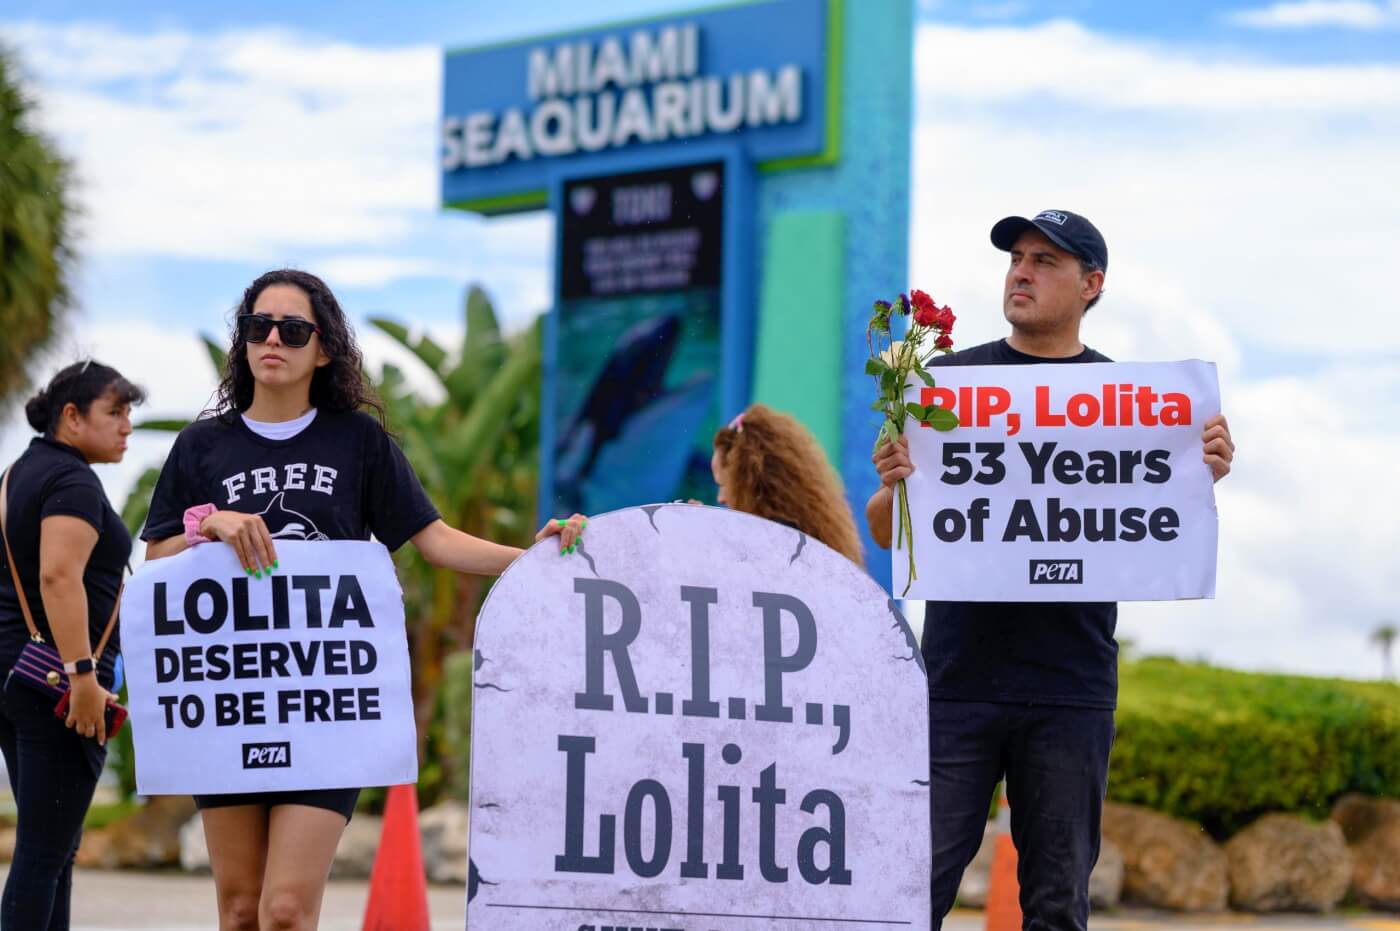 Lolita memorial protest with Miami Seaquarium sign in the background